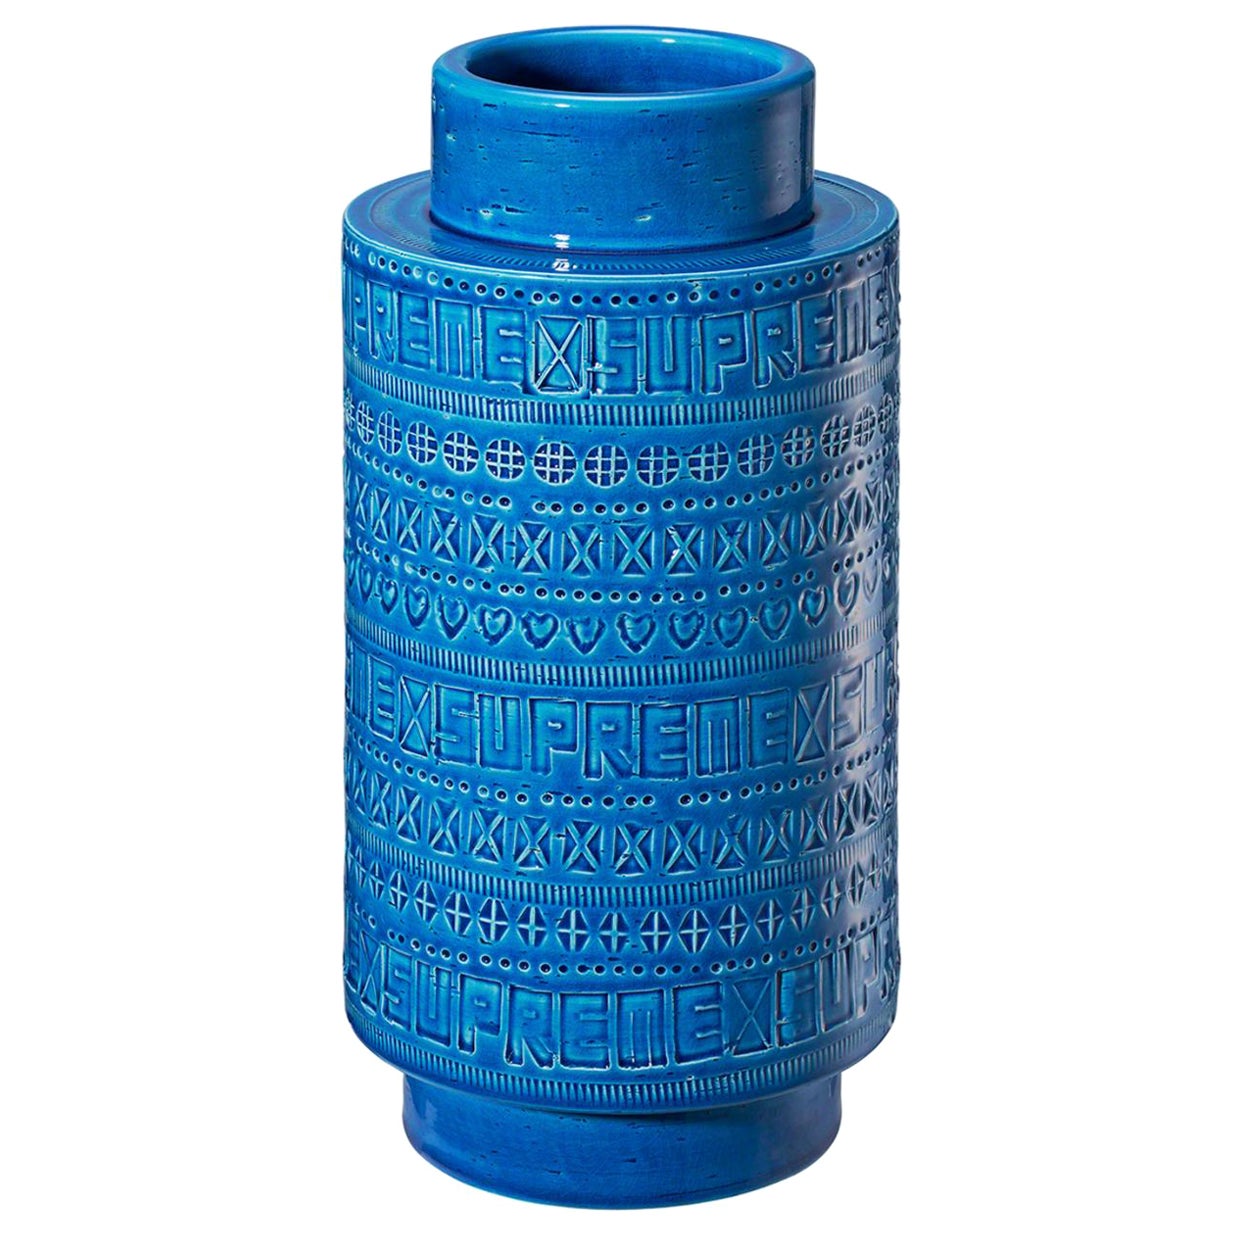 Supreme x Bitossi Frühjahr 2023 Rimini-Blaue Vase, limitierte Auflage. im Angebot